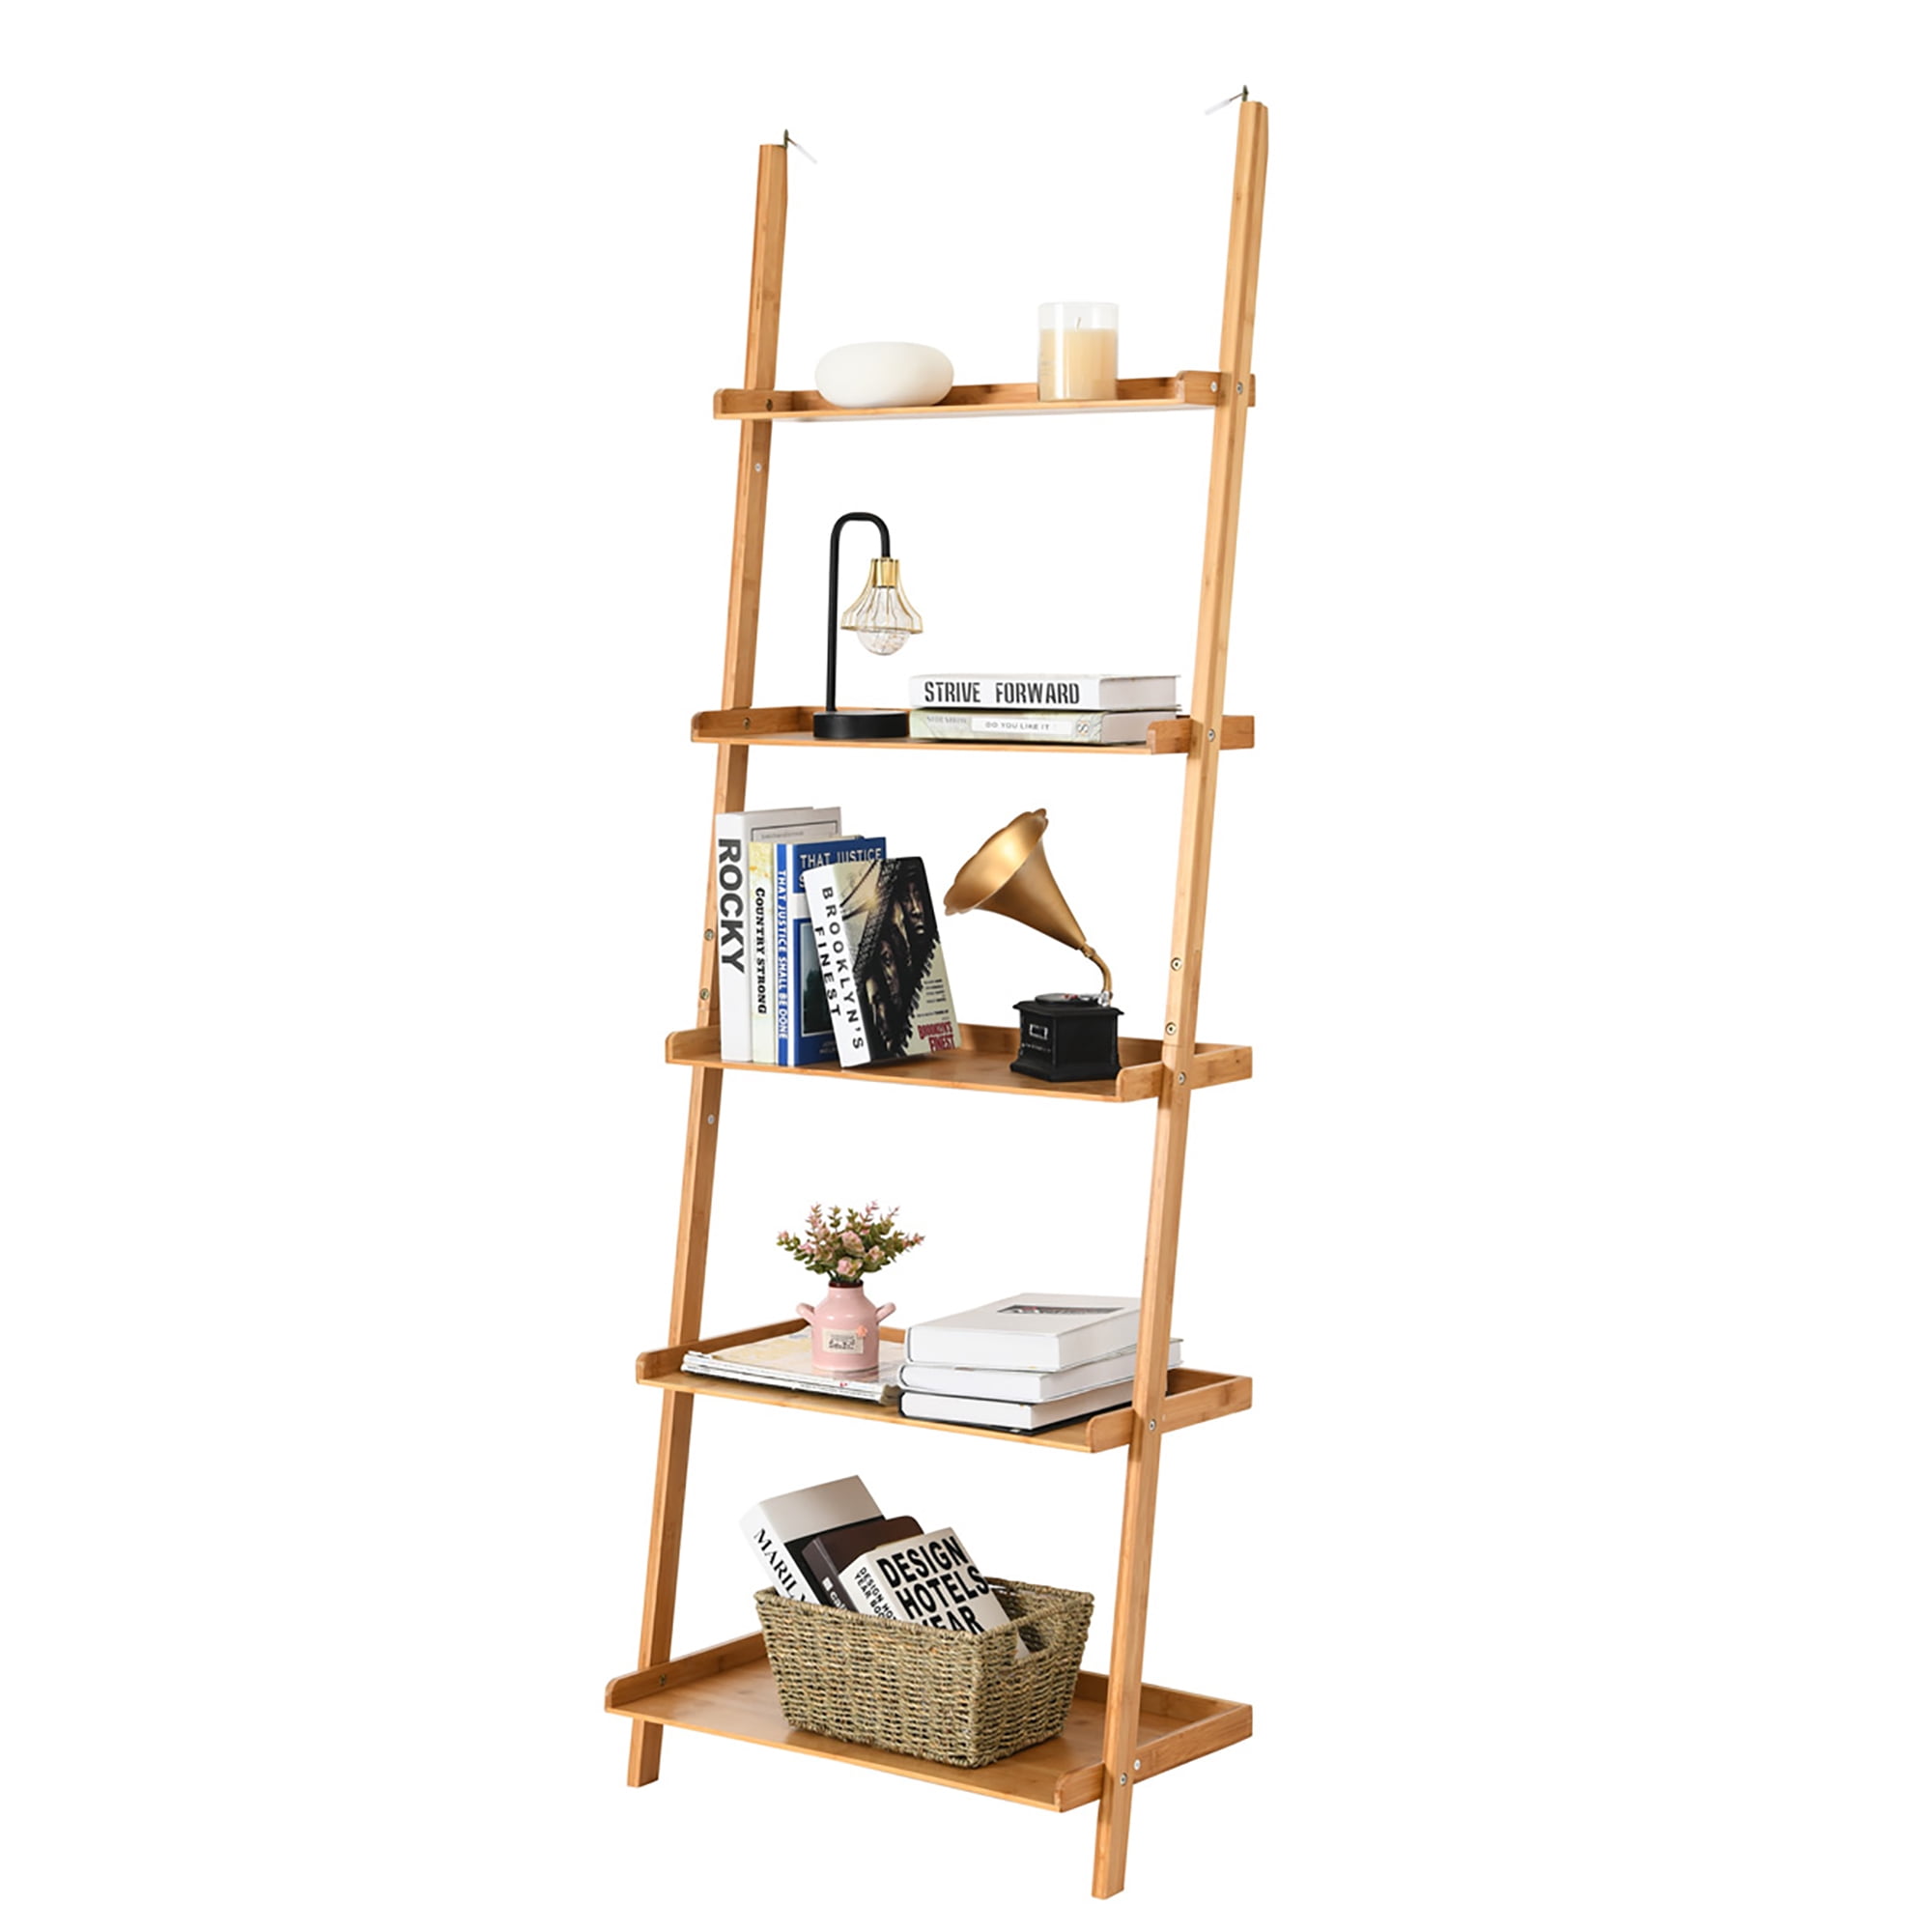 5 Tier Metal Ladder Shelf Shelving Shelves Display Rack Plant Stand Storage Unit